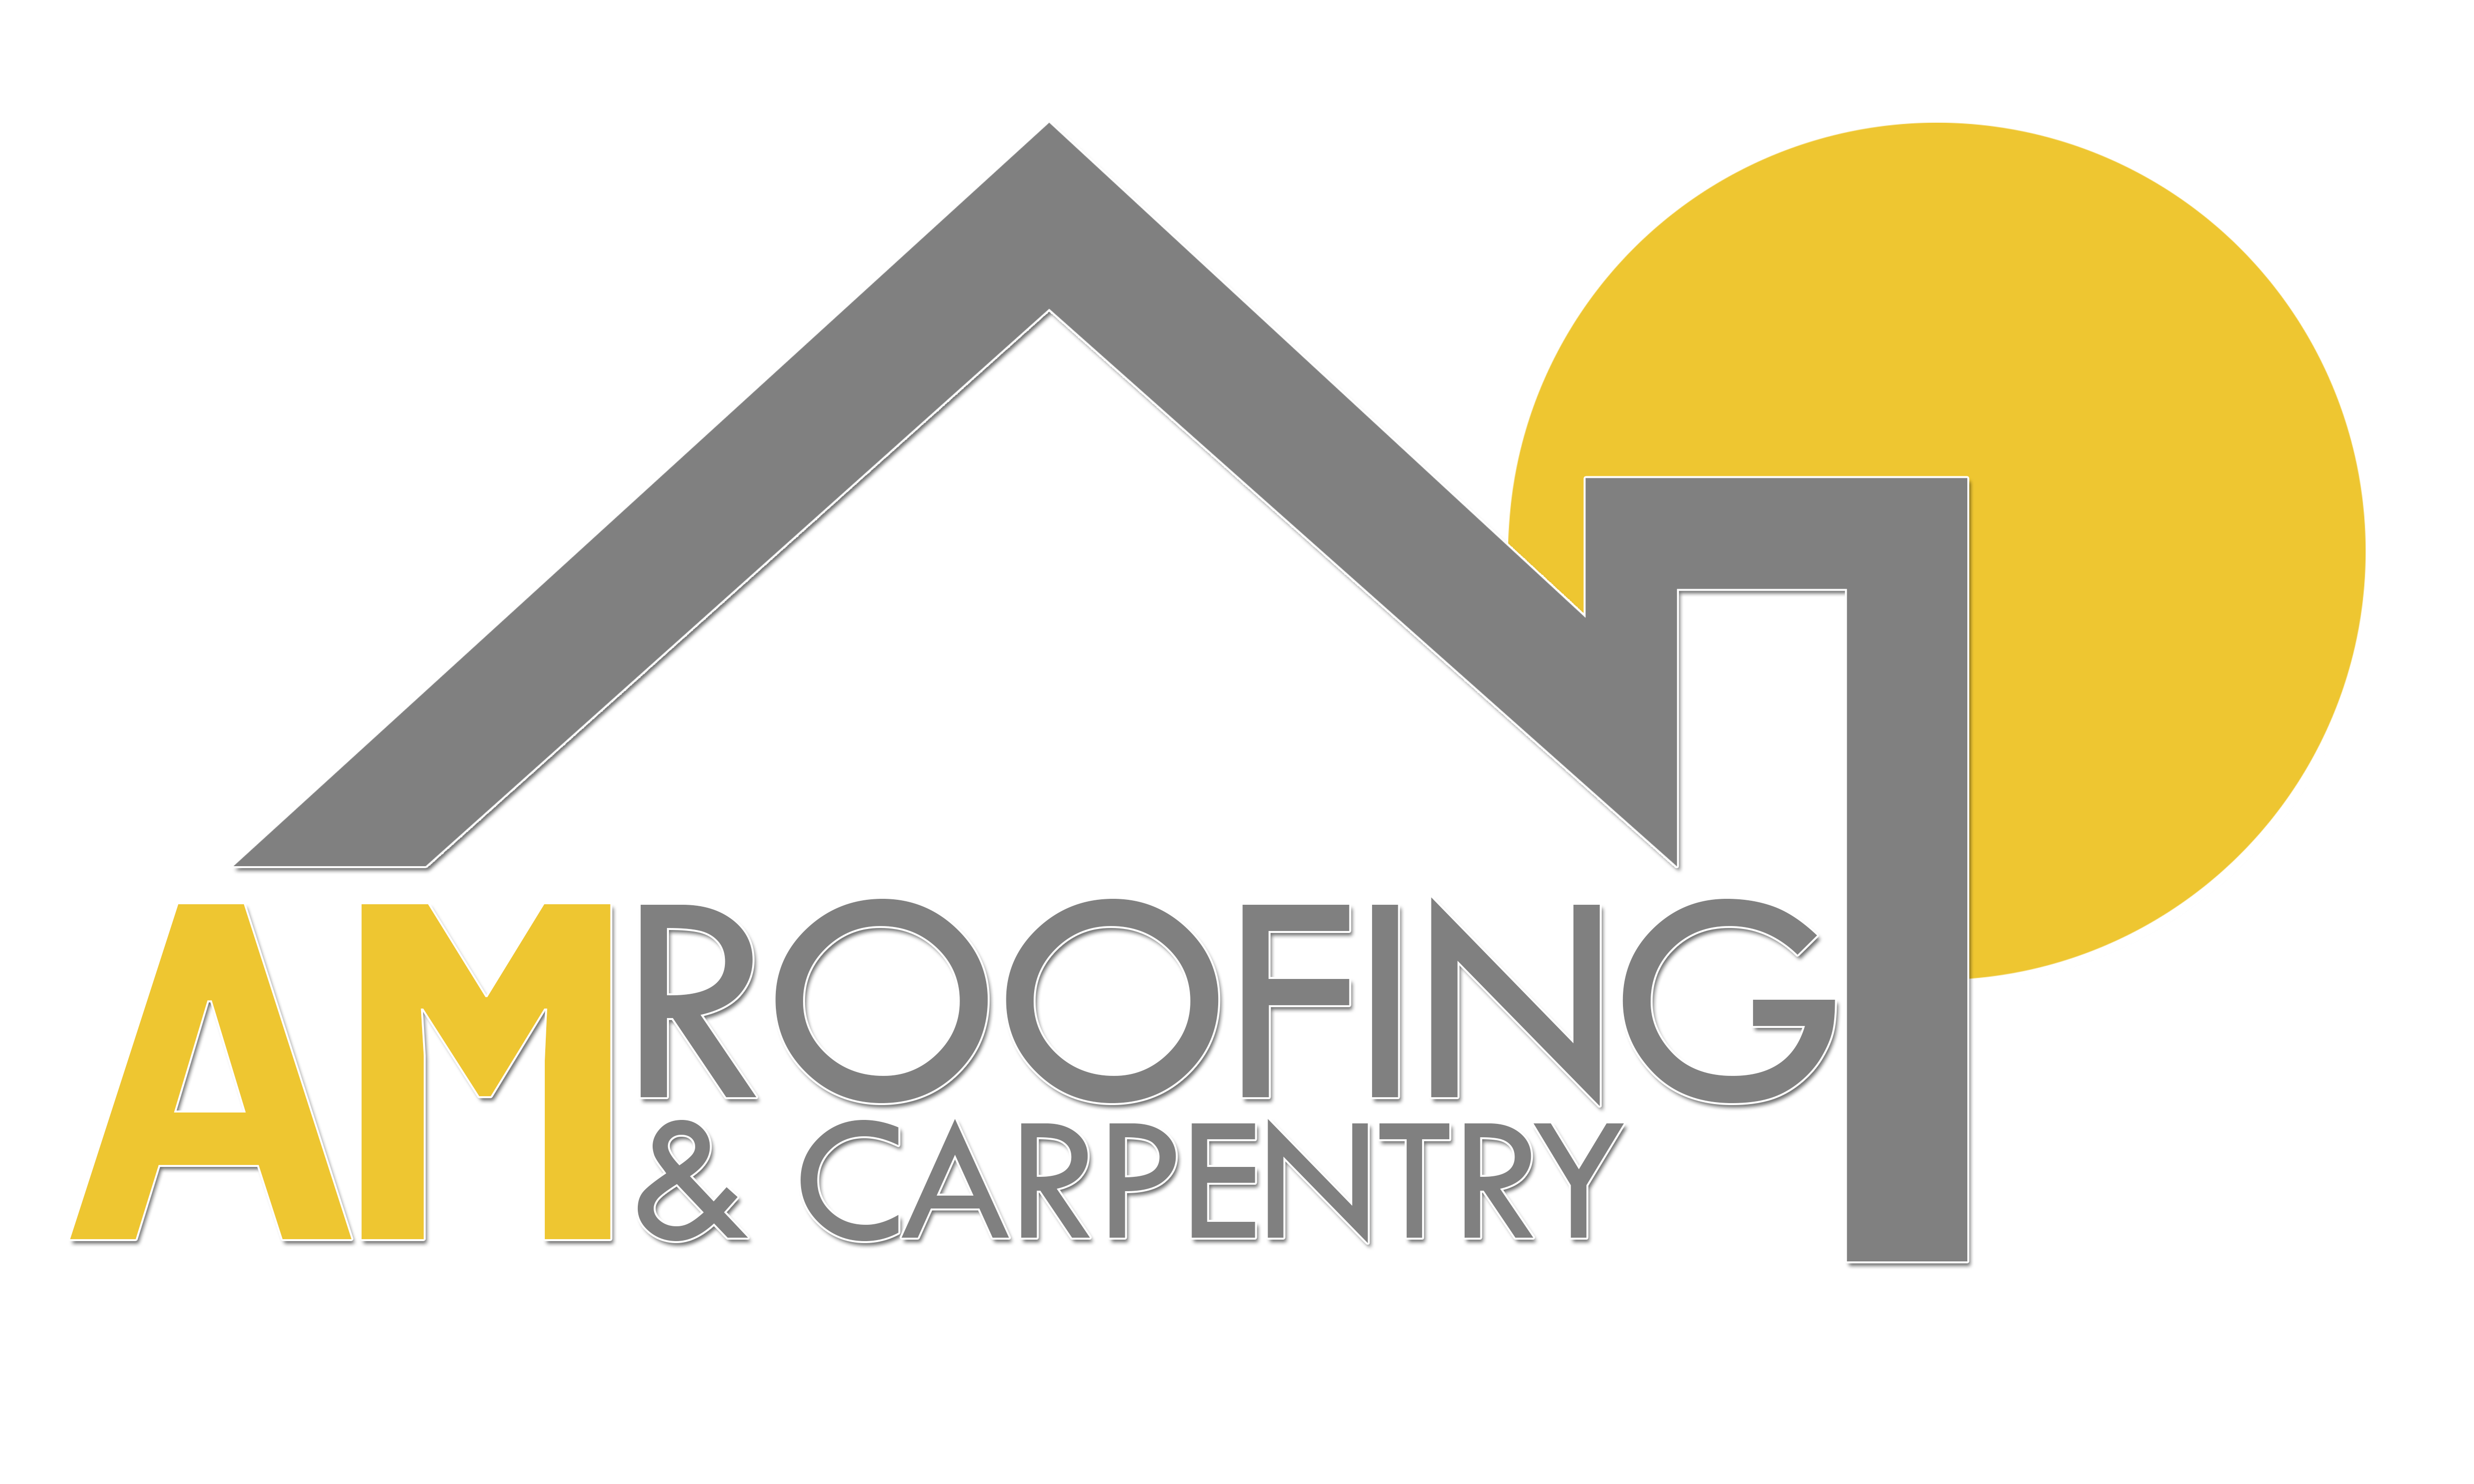 Construction Roof Logo